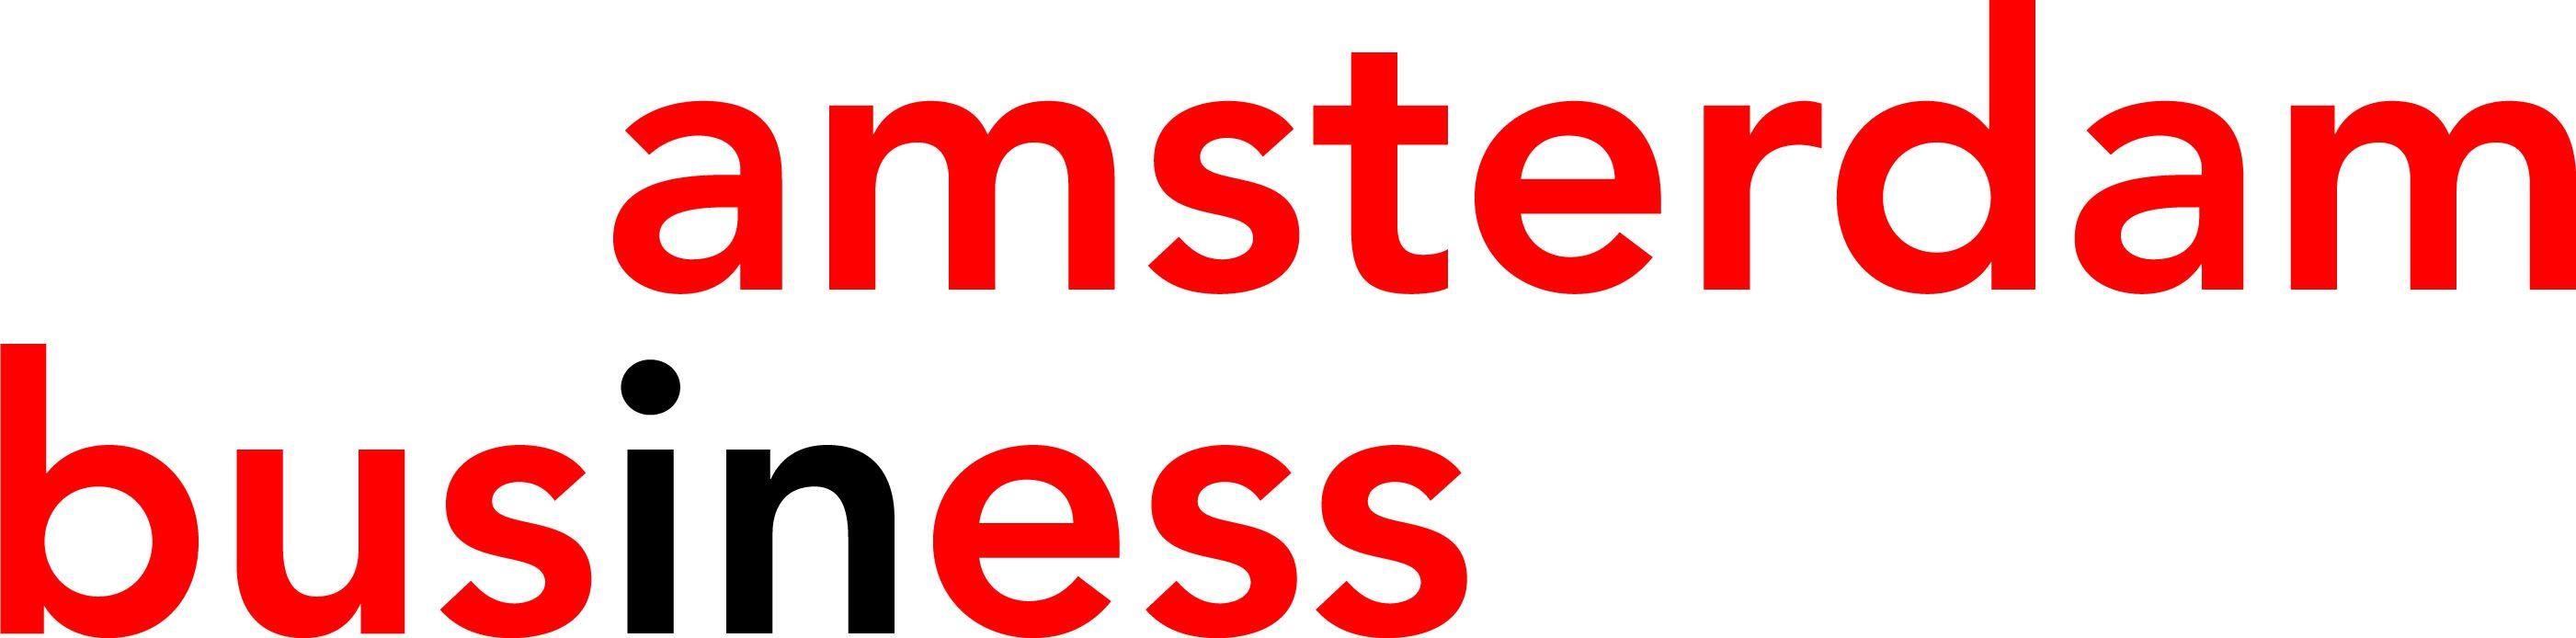 City of Amsterdam logo